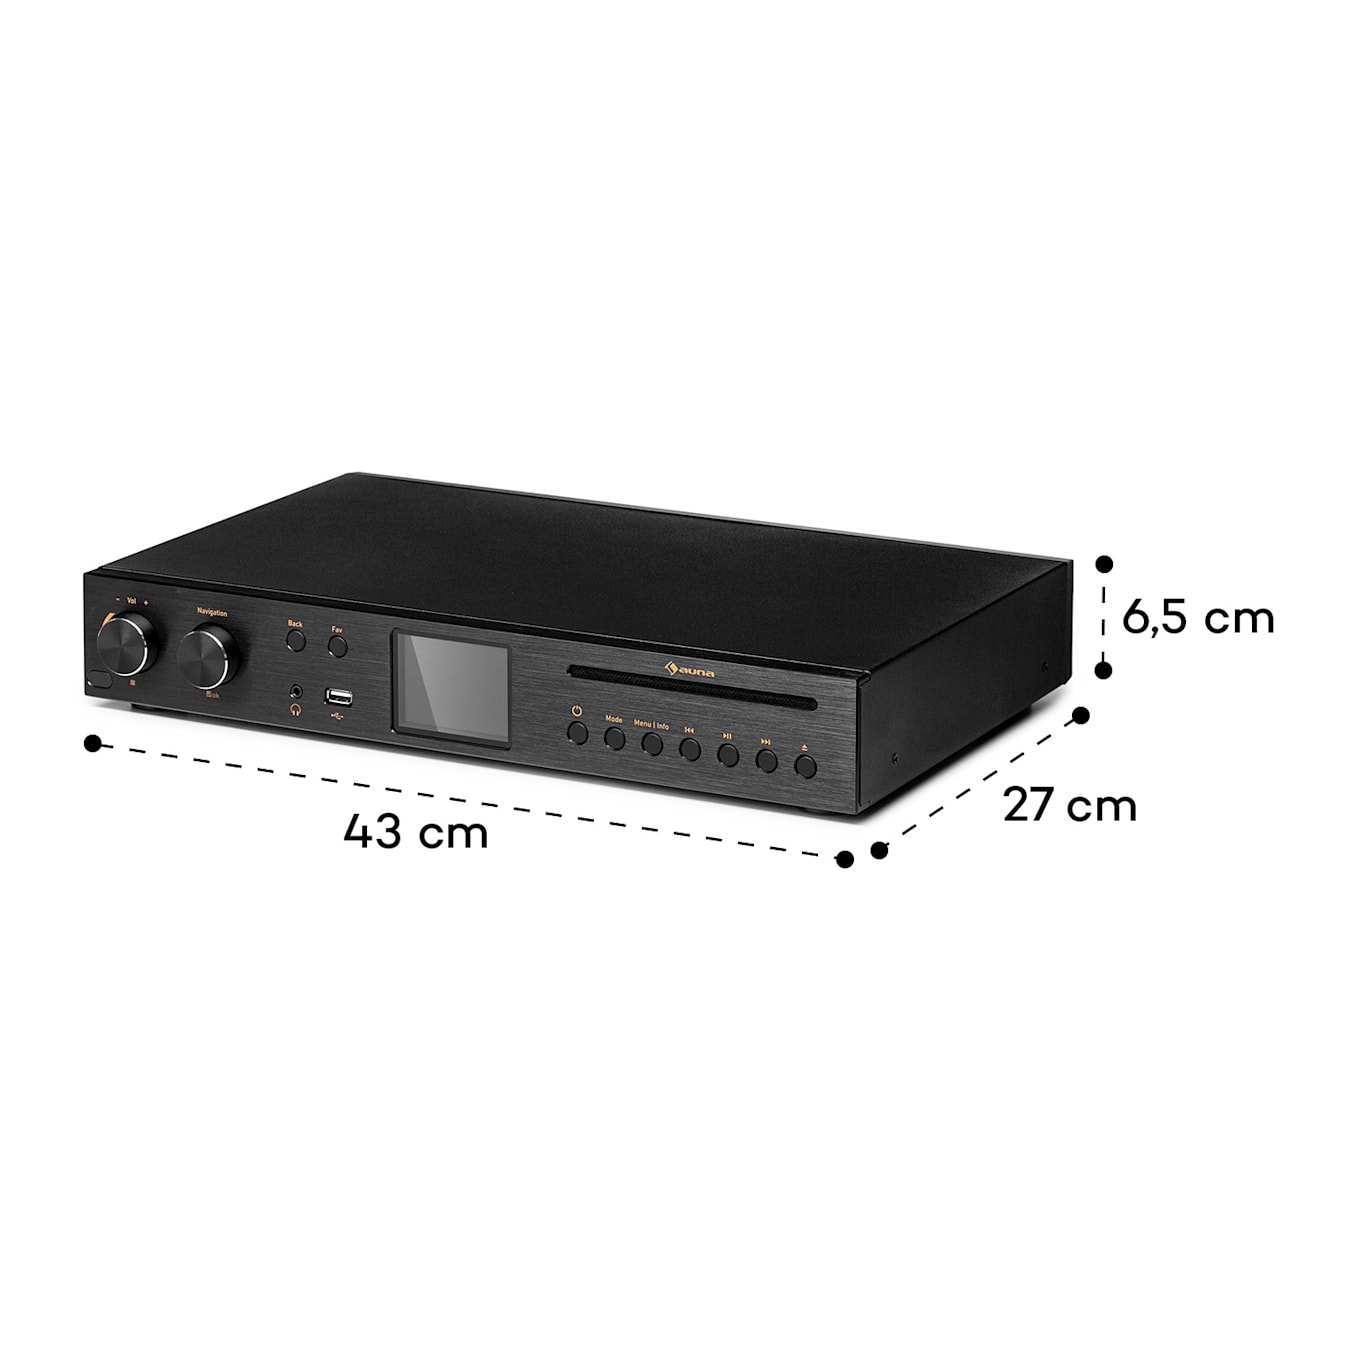 Black Star CD HiFi Receiver Amplifier Internet/DAB+/FM Radio CD Player WiFi